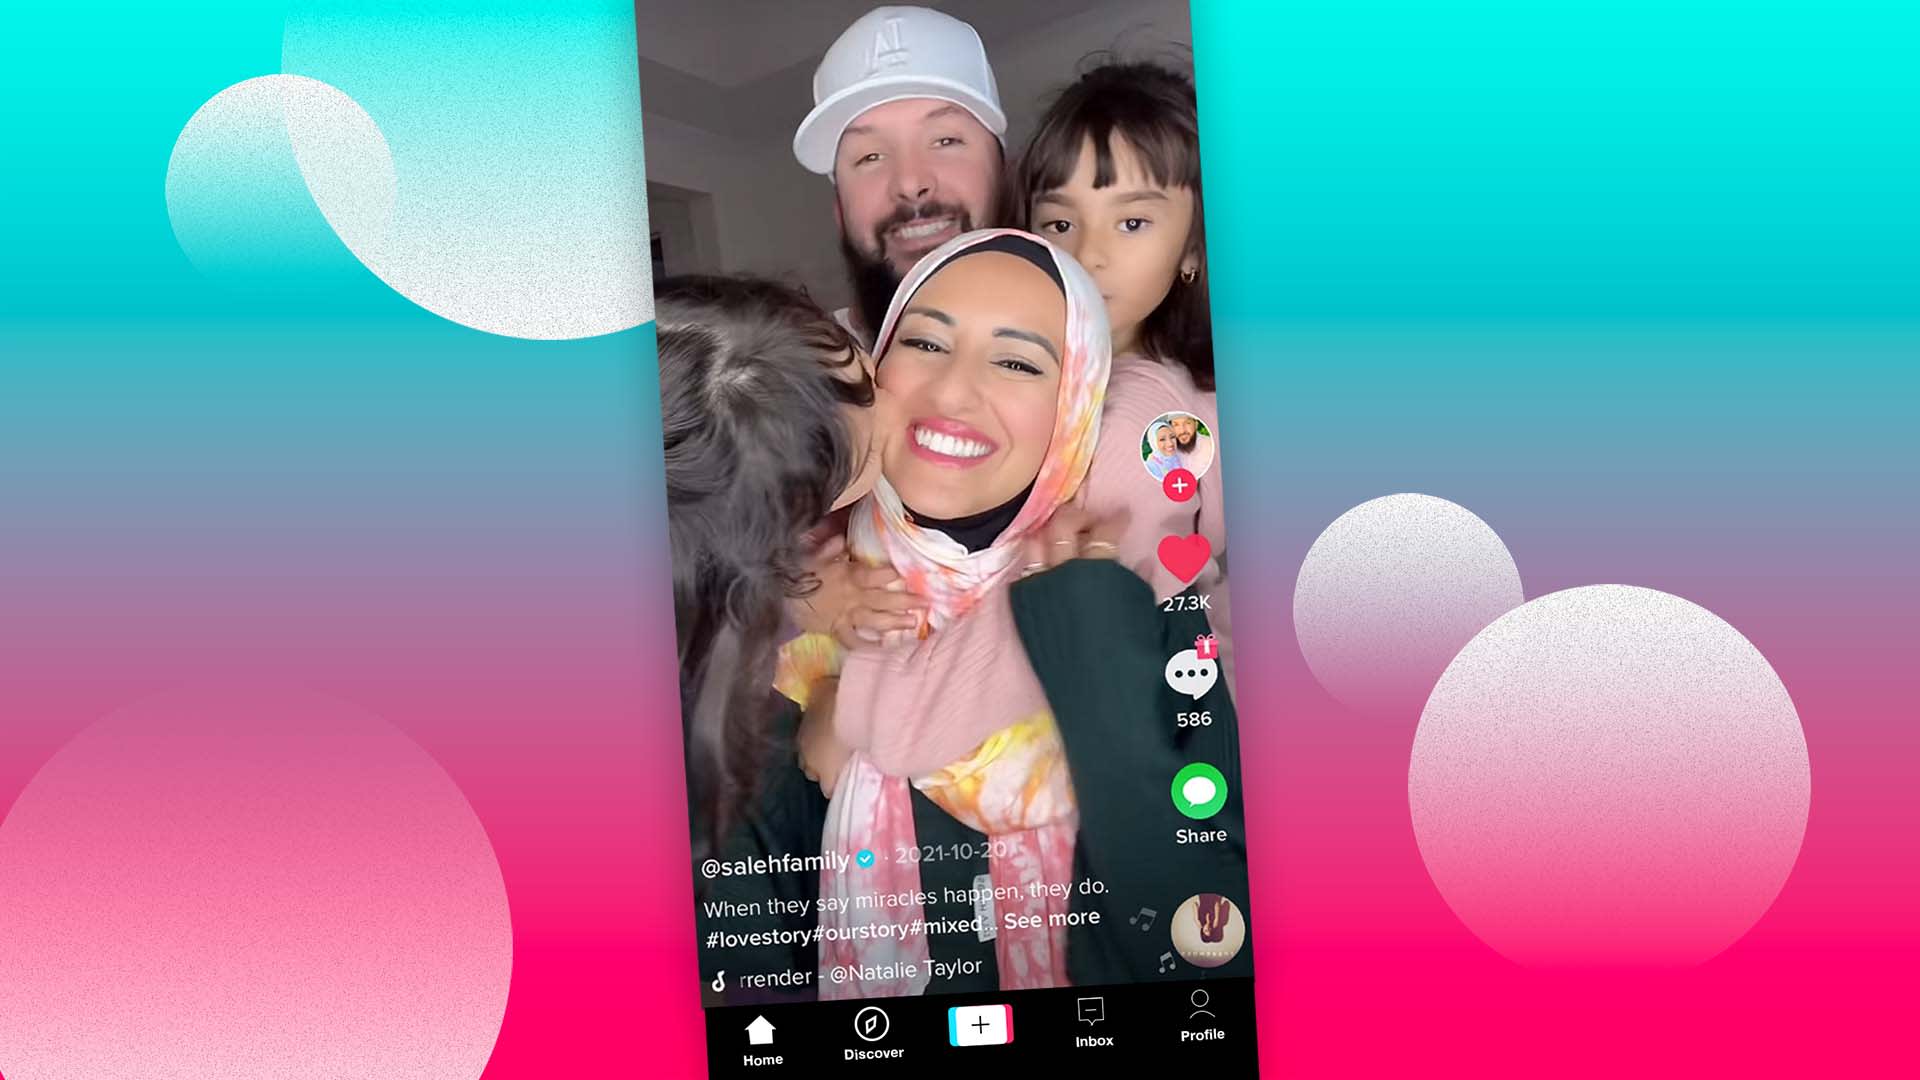 A screenshot from a LaLa Hijabs TikTok video.